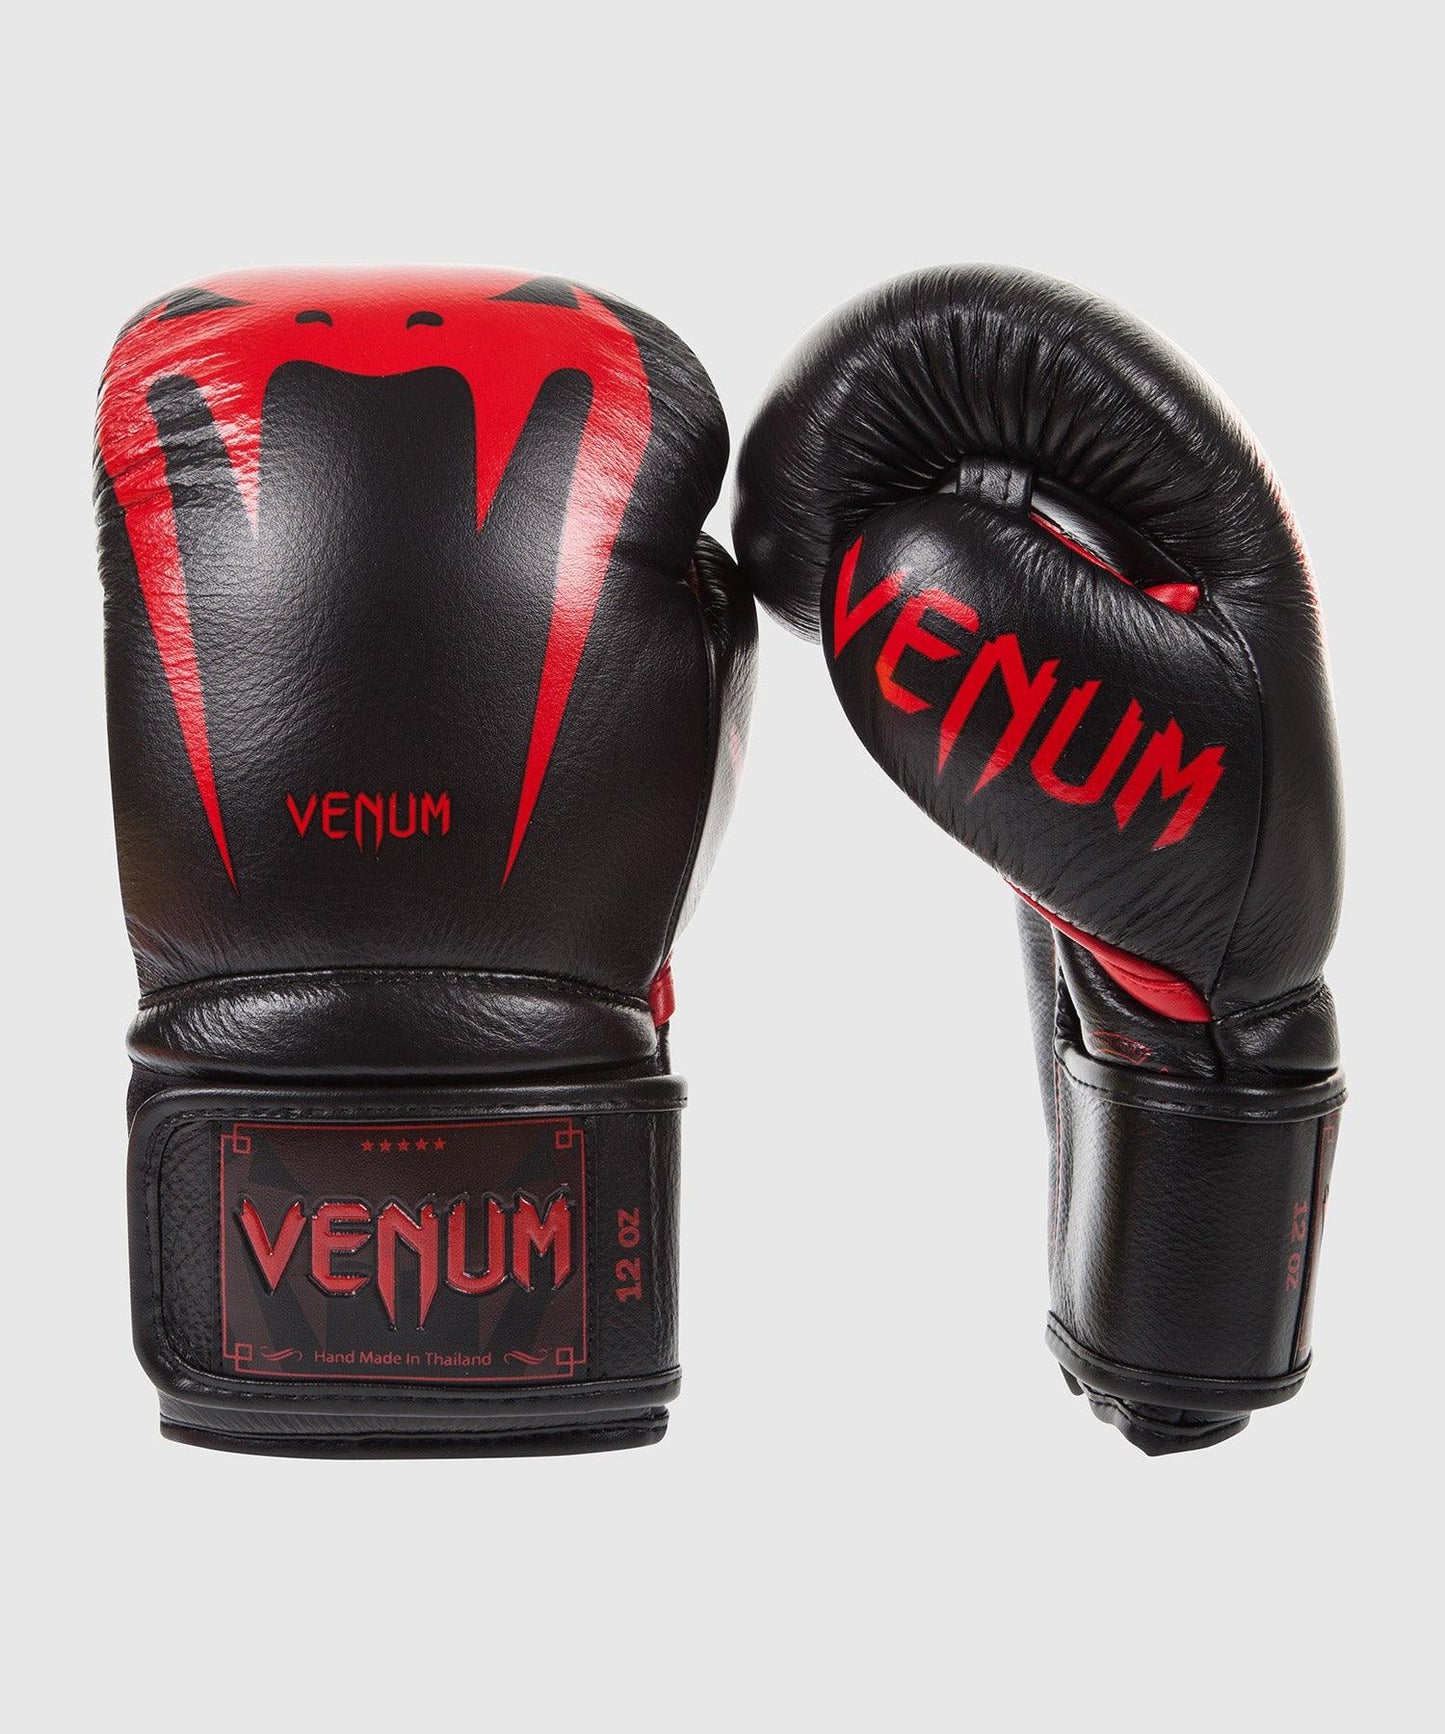 Venum Giant 3.0 Boxing Gloves - Nappa Leather - Black Devil Picture 1